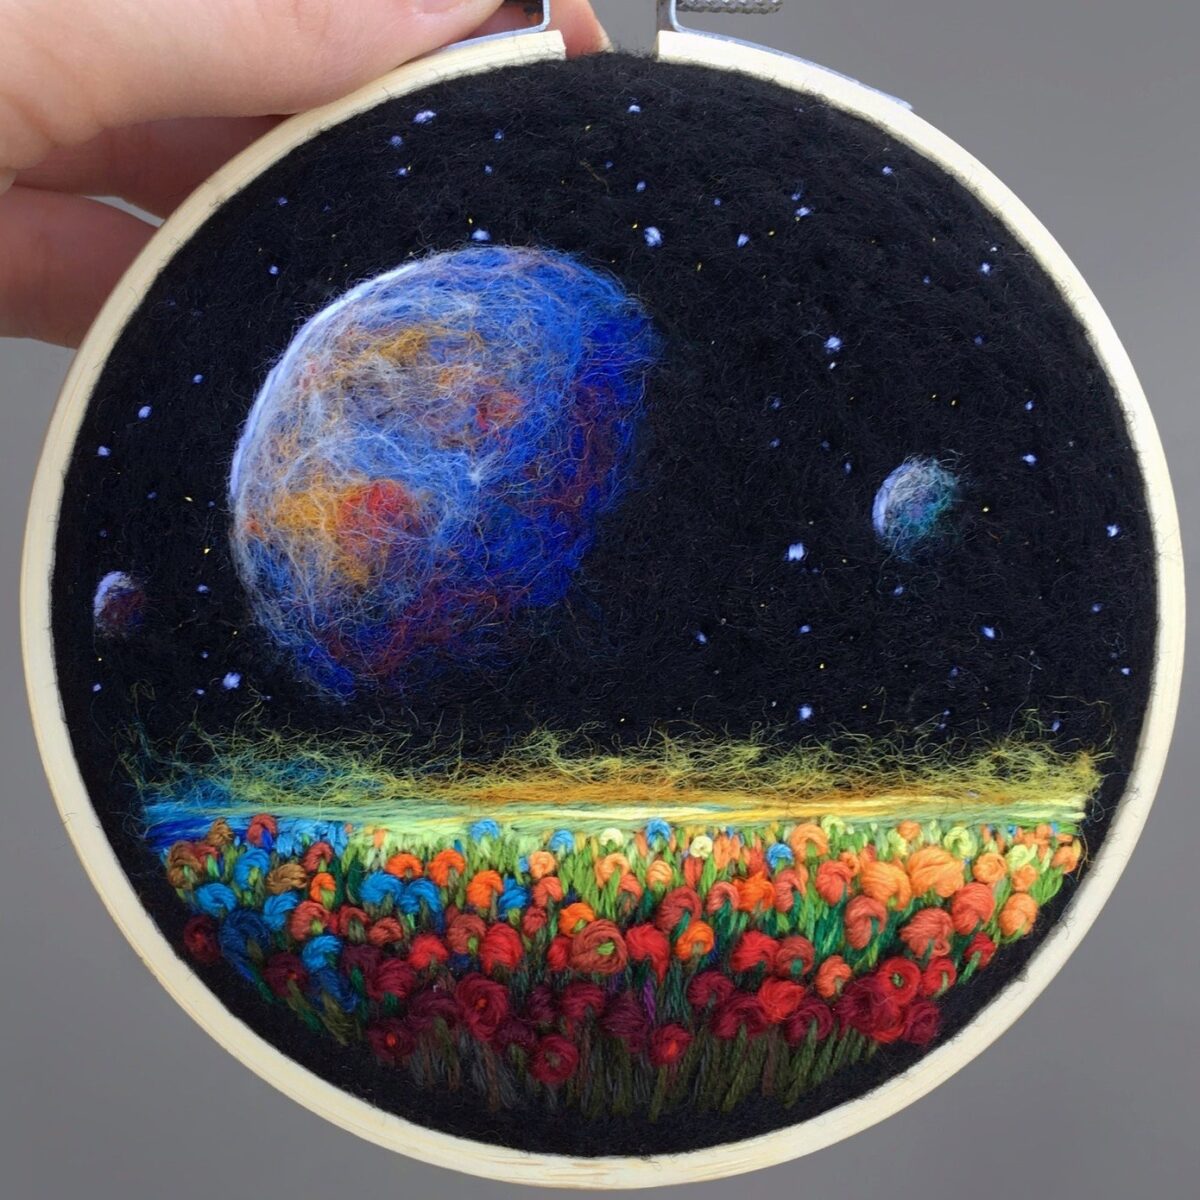 Lush Night Sky Landscape Needle Felted And Embroidered Art Hoops By Yuliya Krishchik 4